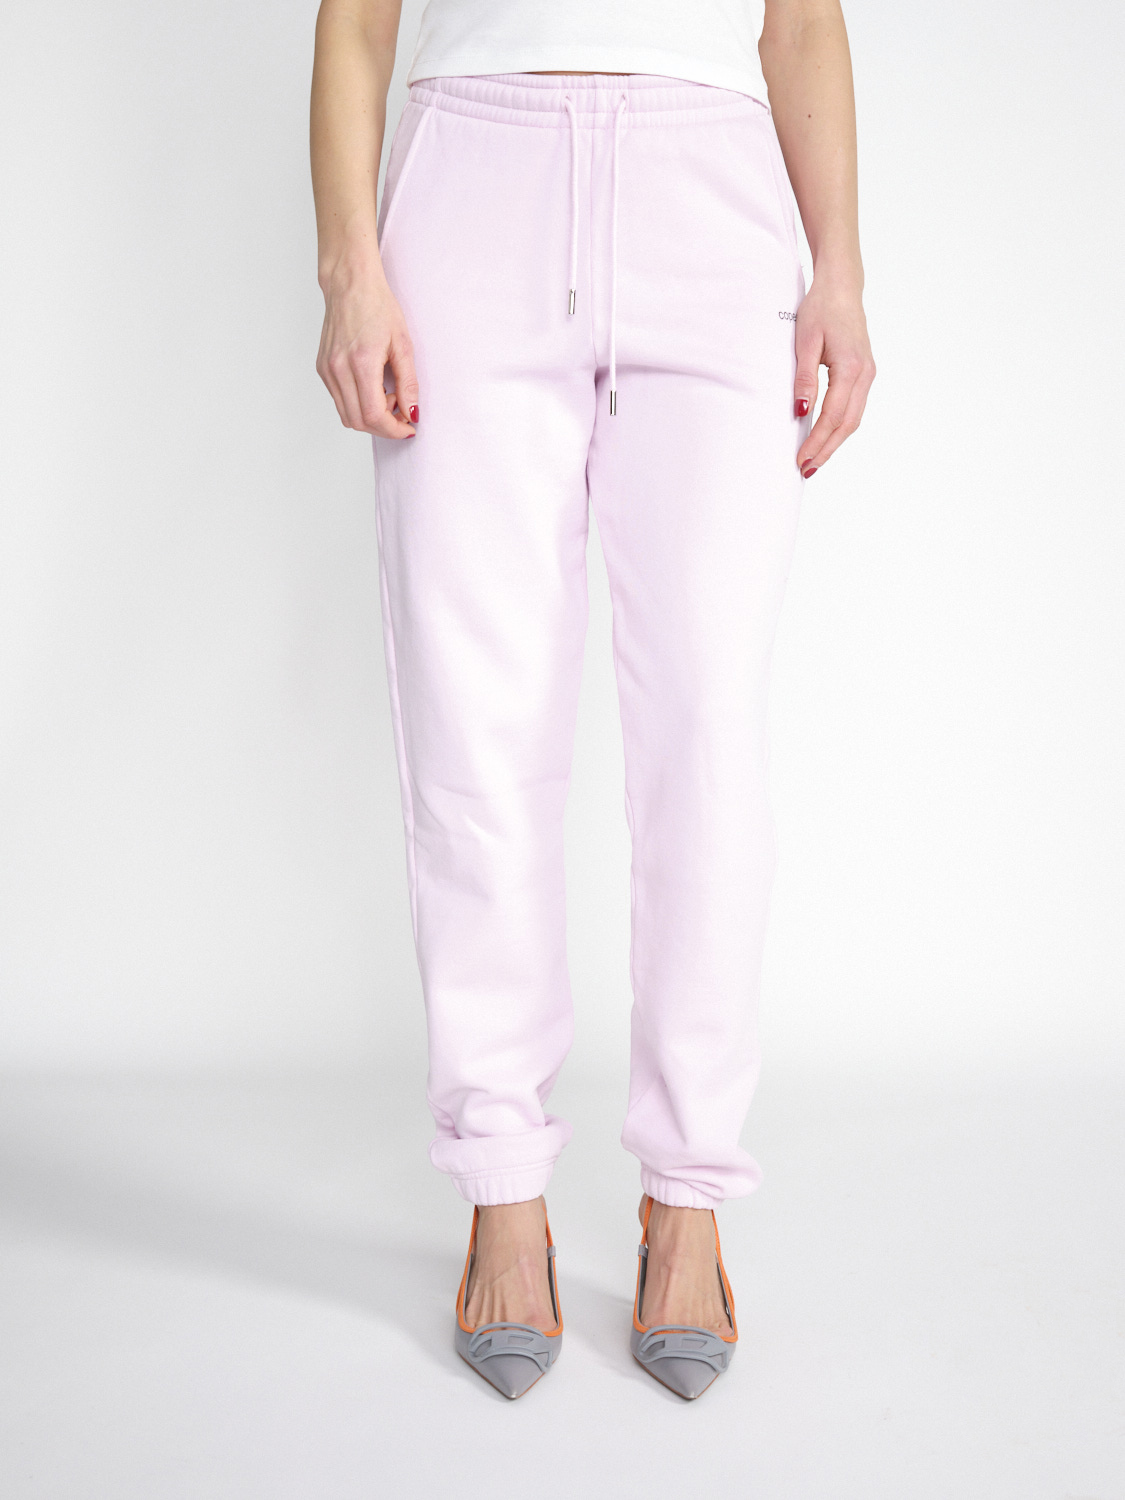 Coperni Sportif jogg-pants en coton mélangé rosa S